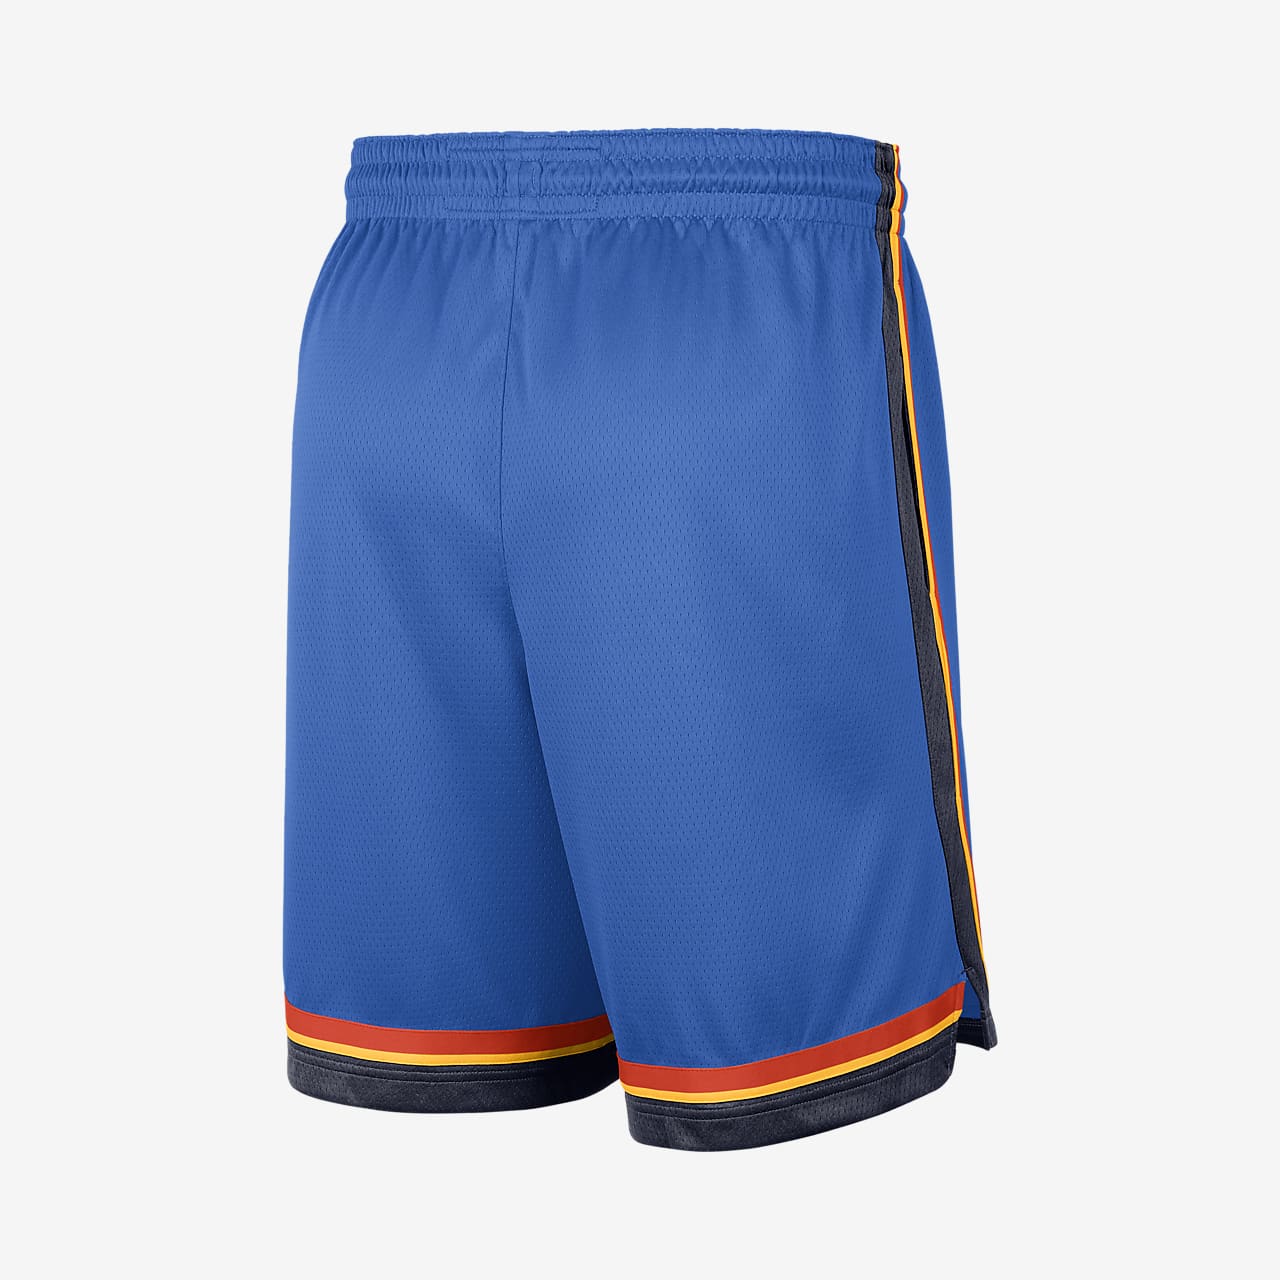 Warriors City Edition Nike NBA Swingman Shorts.